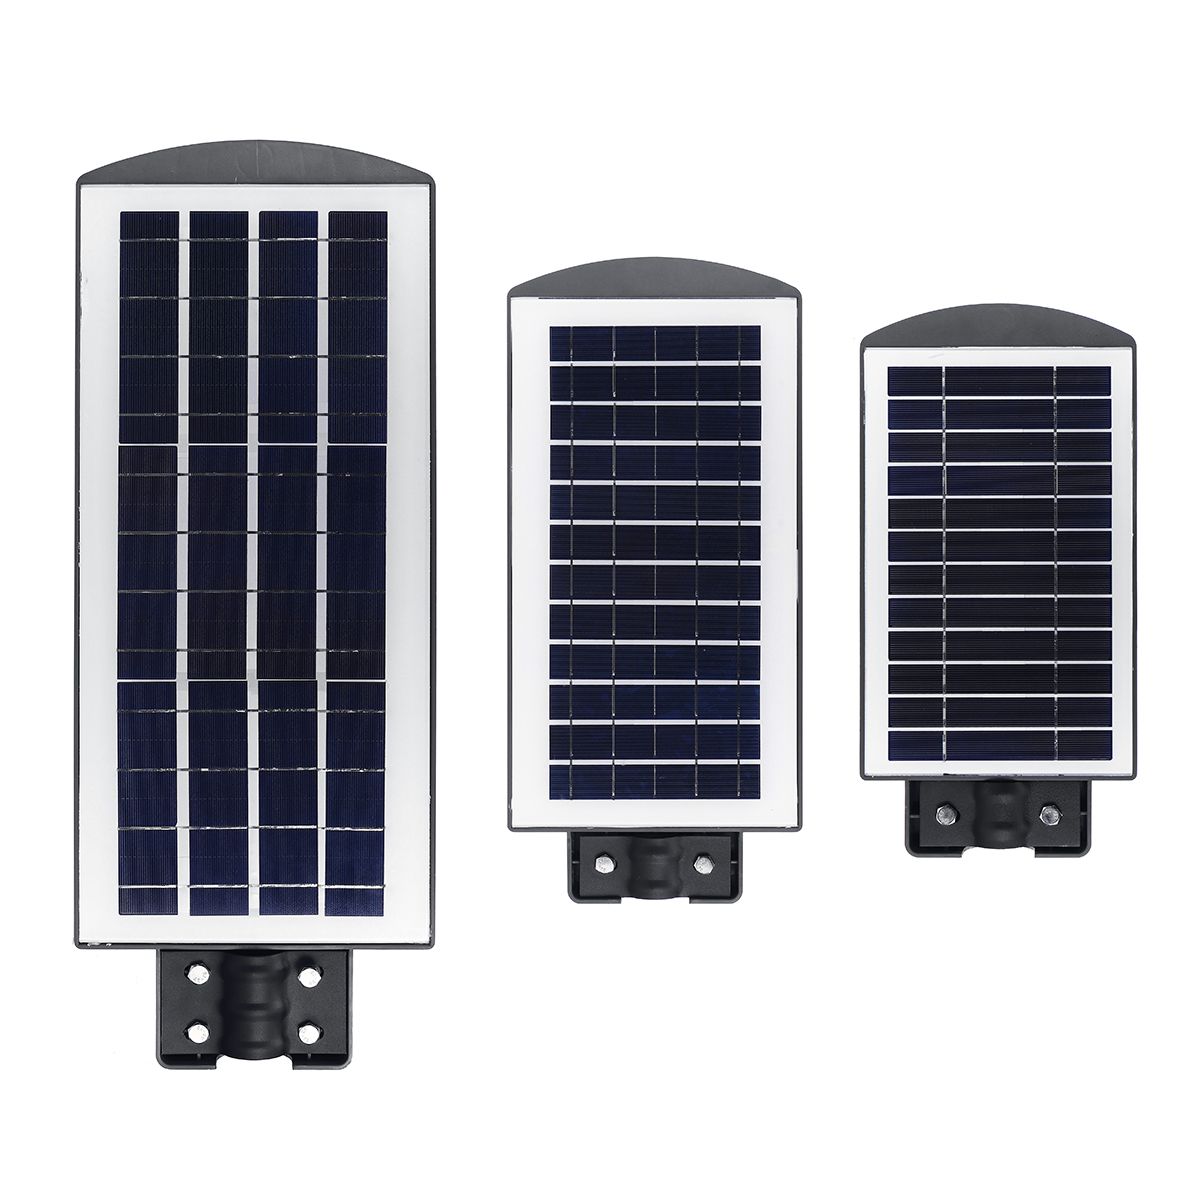 50100150-LED-Solar-Street-Light-With-Remote-Control-Dusk-to-Dawn-Waterproof-IP65-Radar-Sensor-Outdoo-1621107